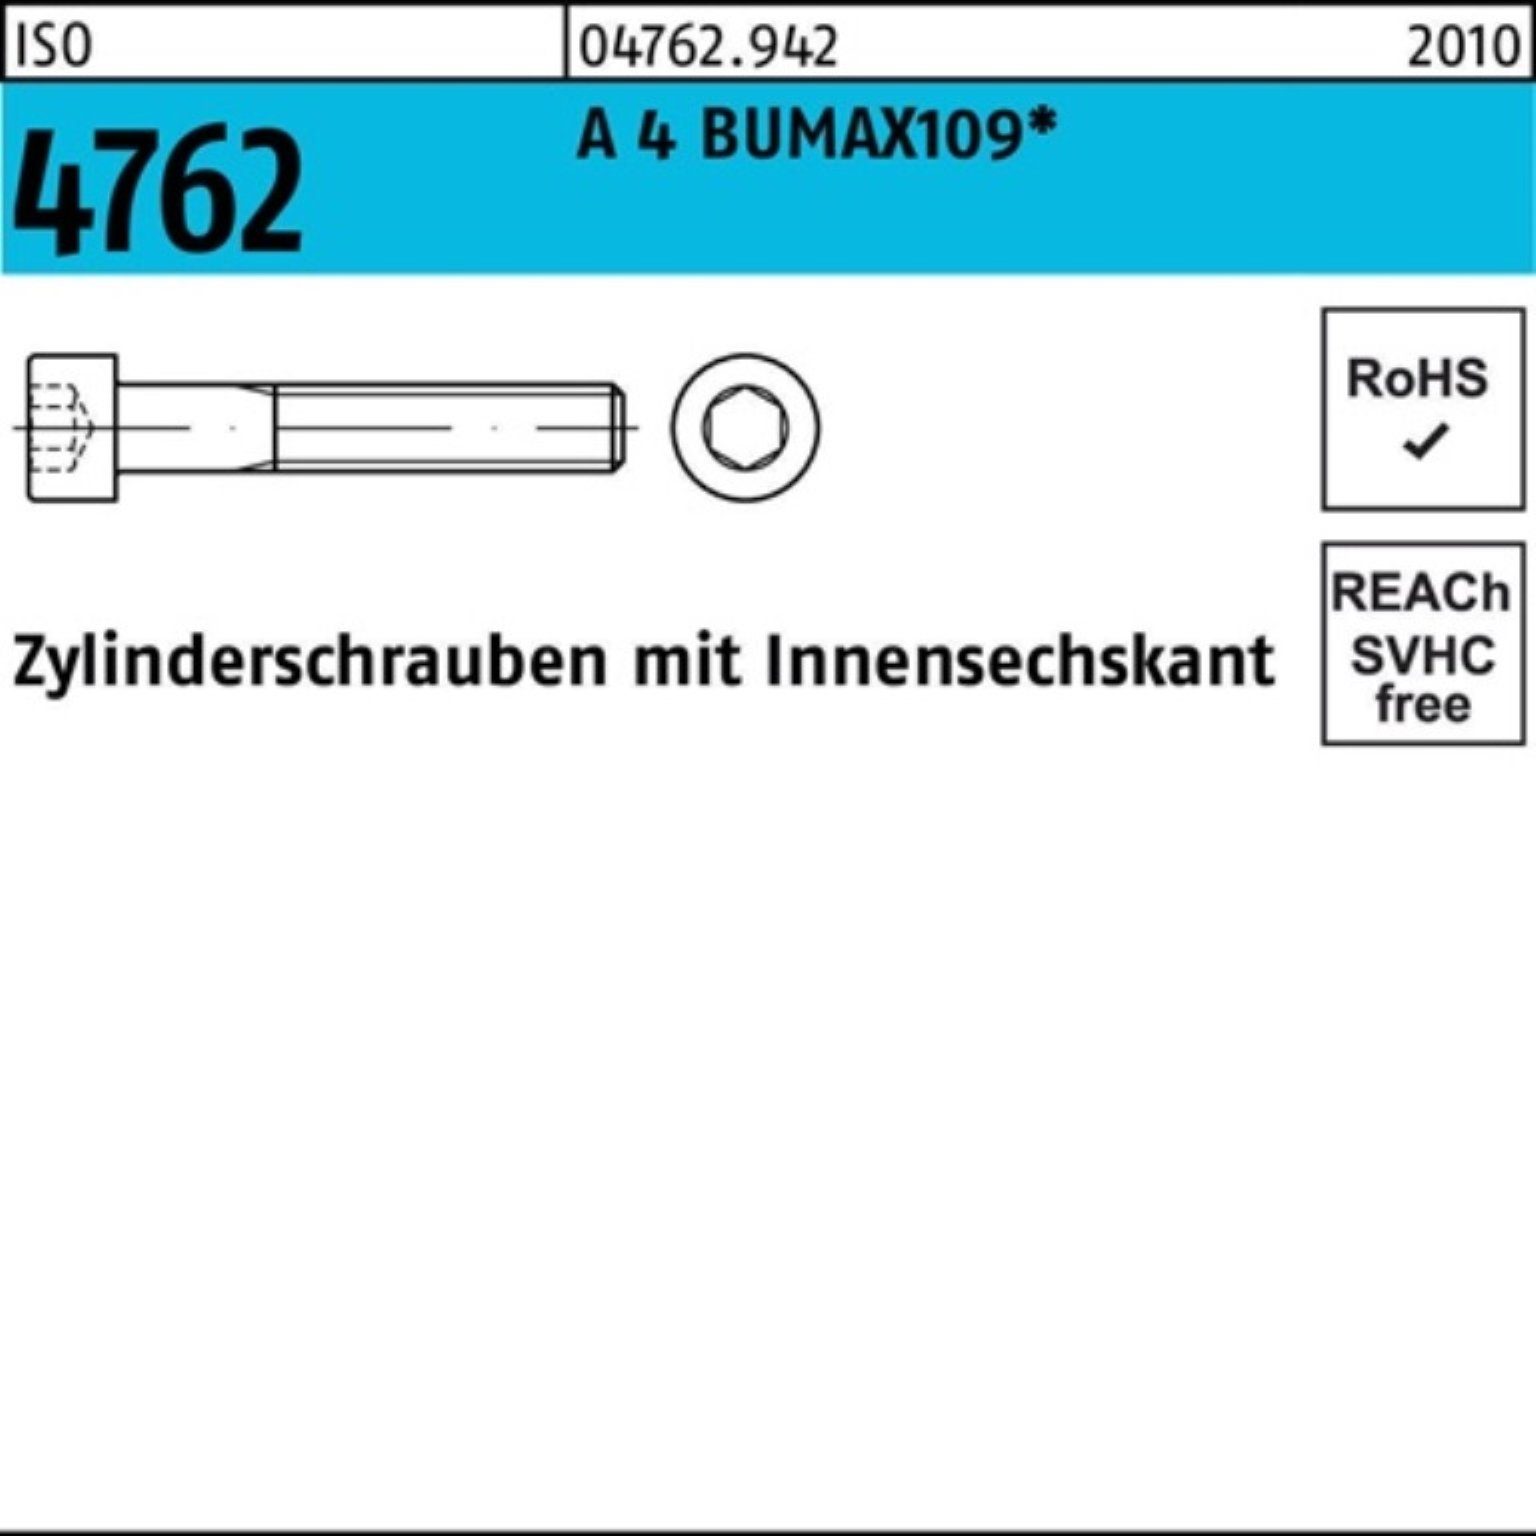 Zylinderschraube Innen-6kt BUMAX109 M10x A 4 Pack ISO 50 100er Bufab 4762 60 Zylinderschraube